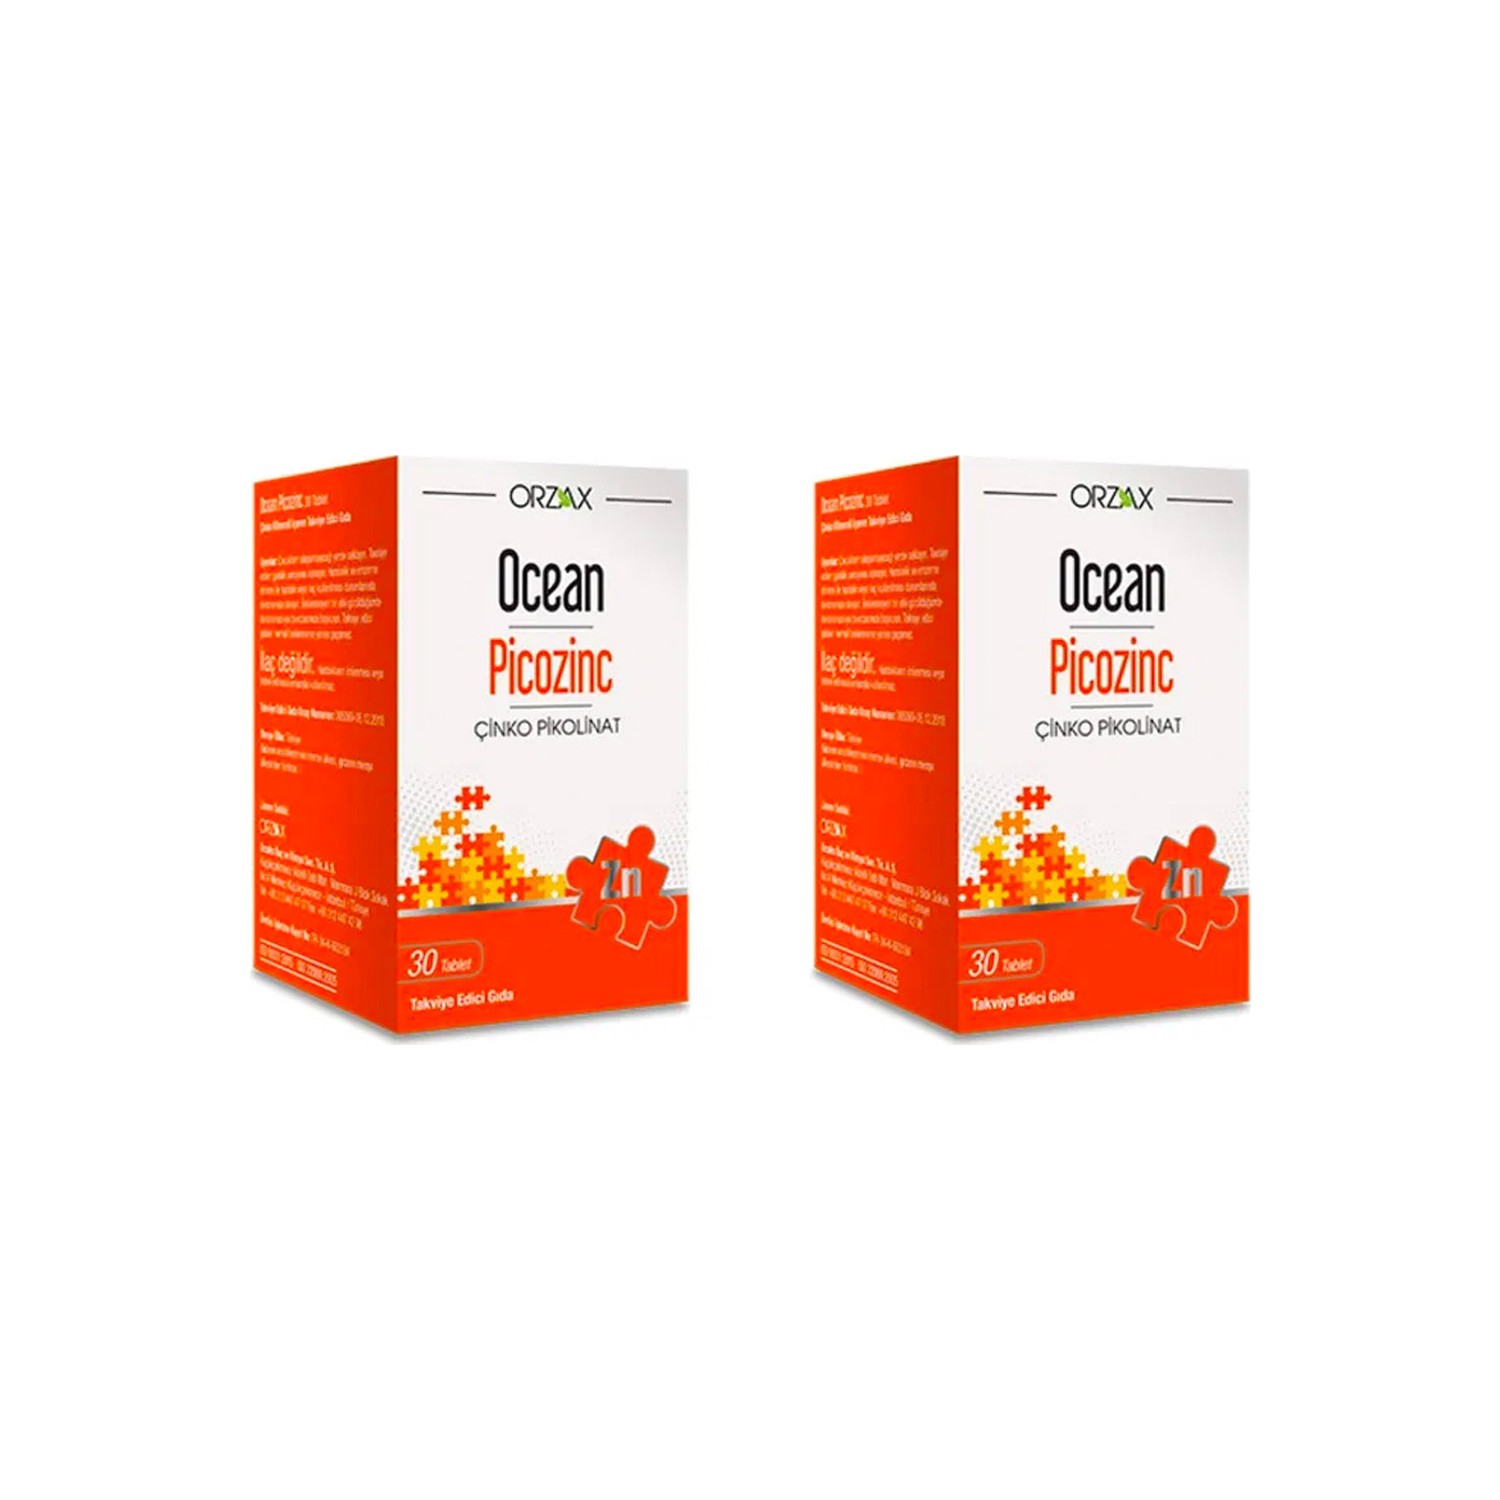 Пищевая добавка Orzax Ocean Picozinc Cinko Picolinate, 2 упаковки по 30 таблеток цинка пиколинат 30 таблеток